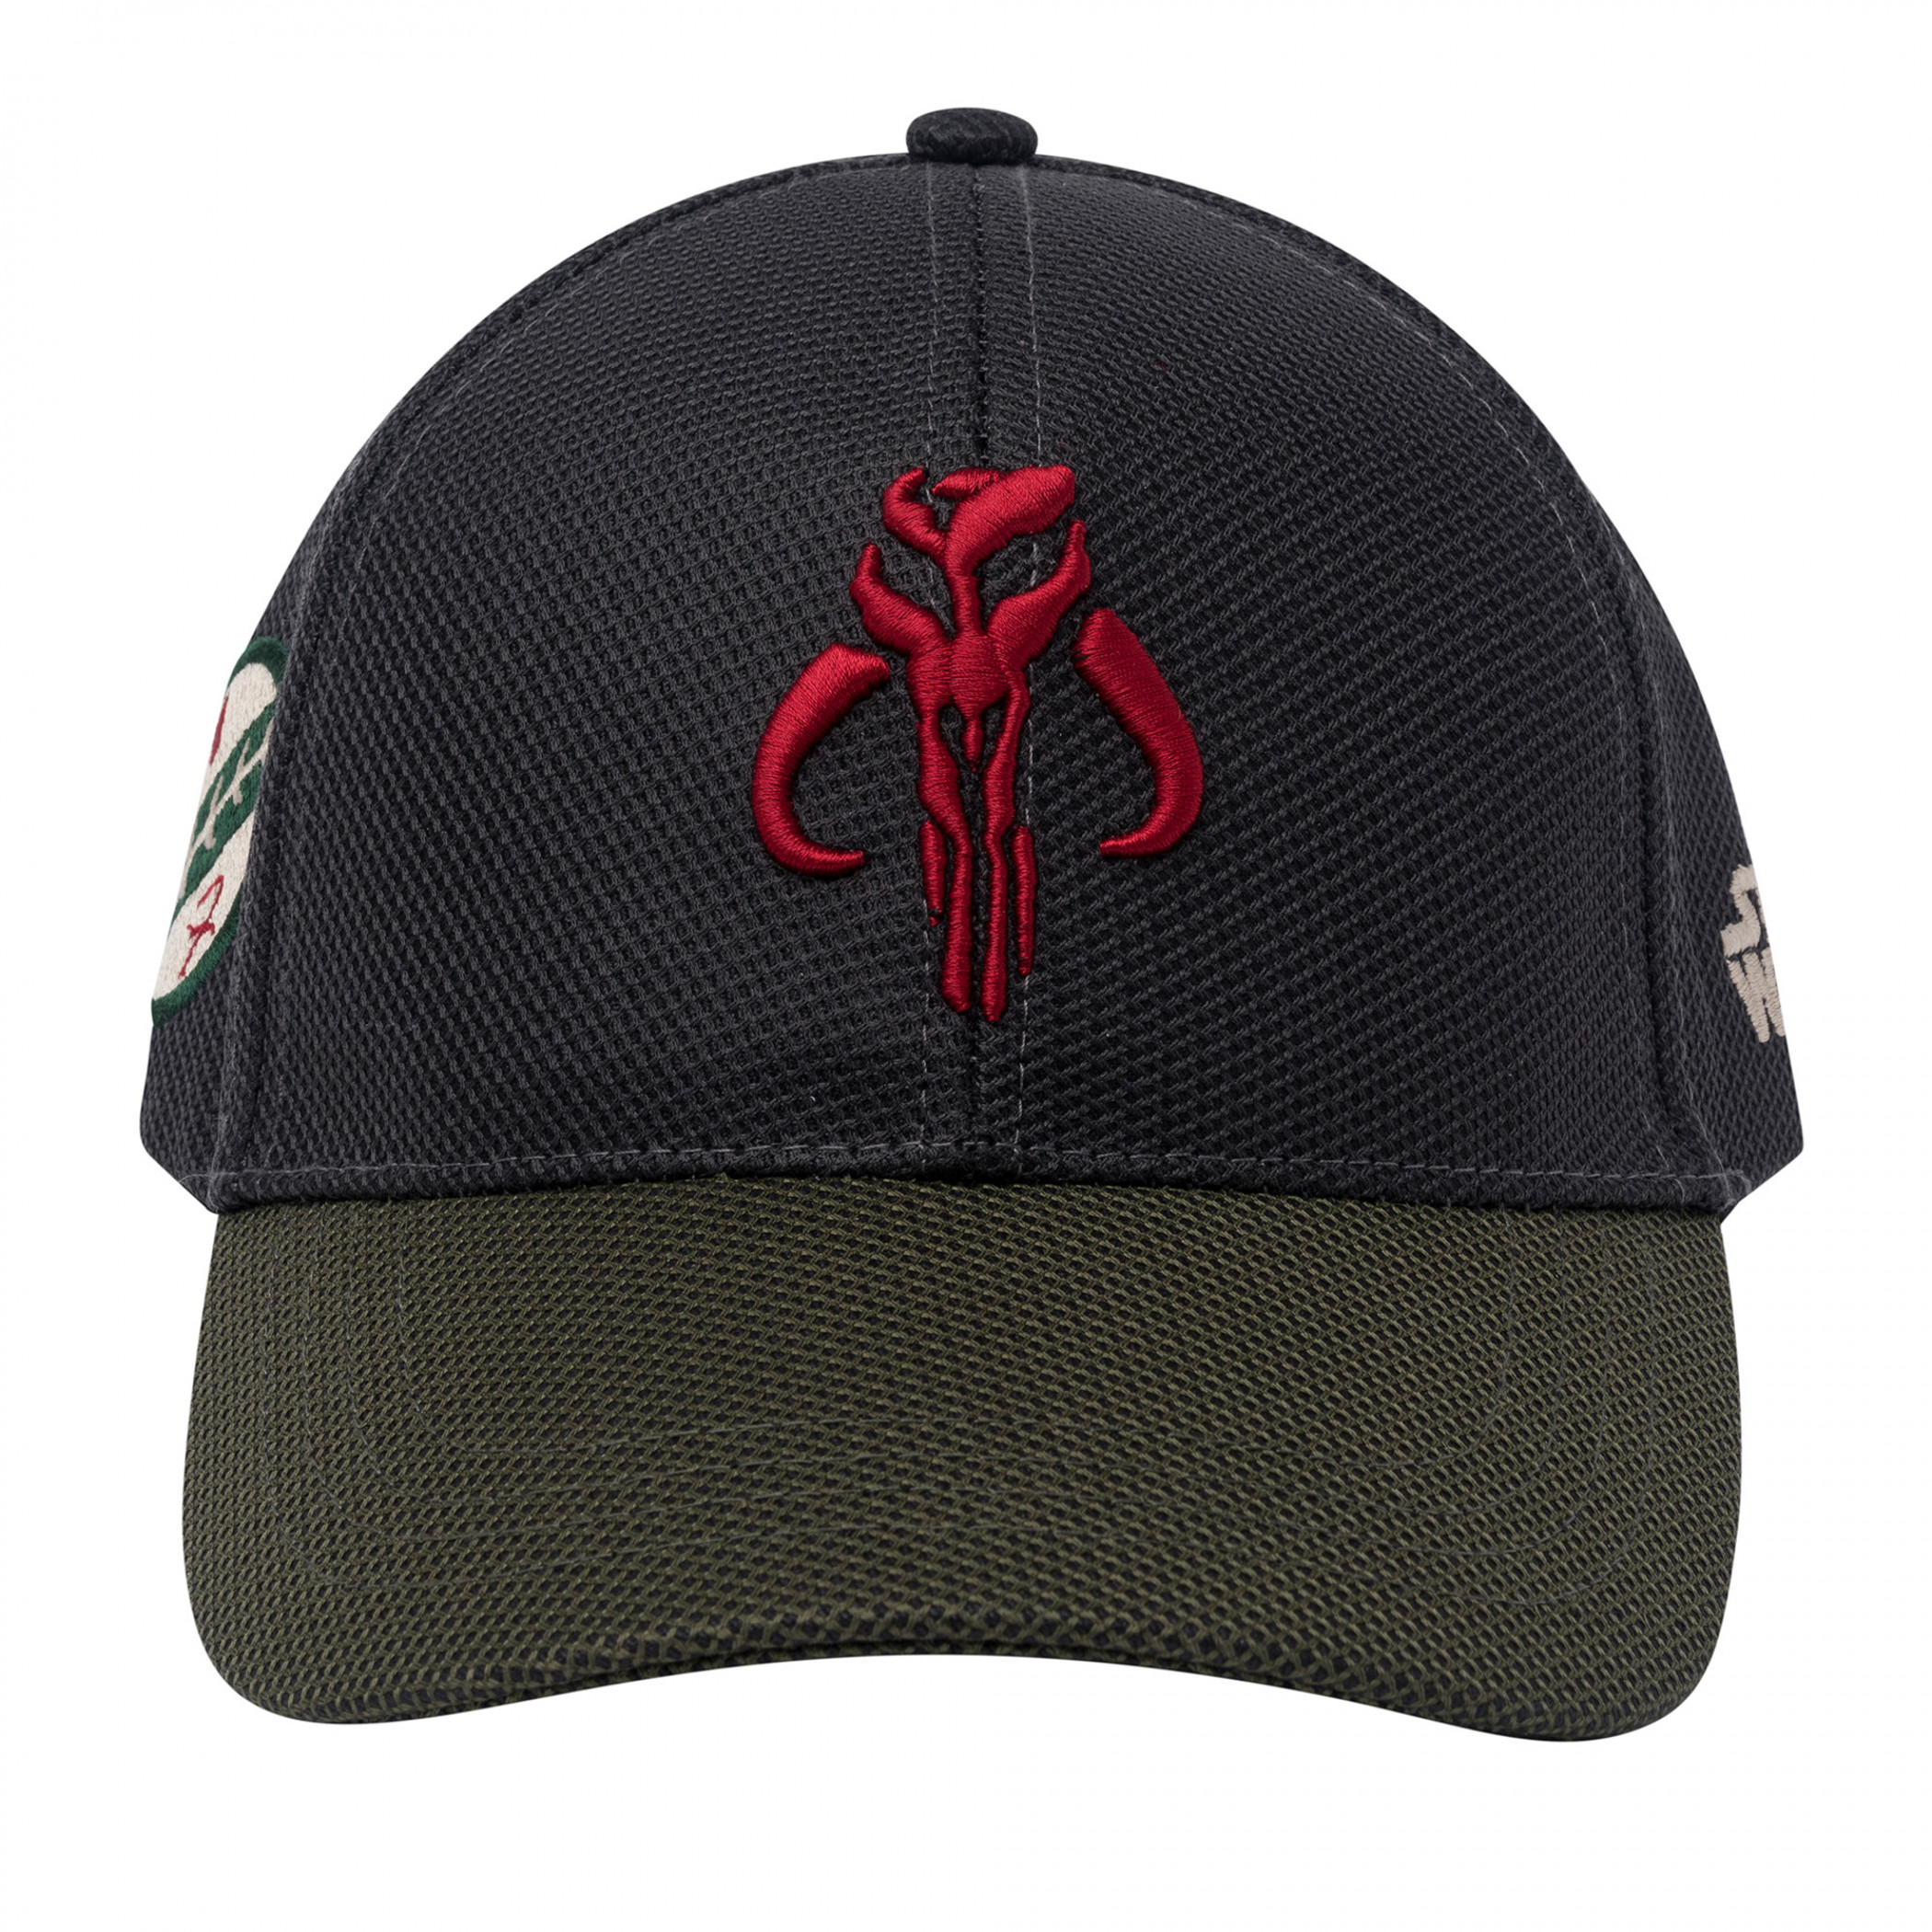 Star Wars Boba Fett The Mandalorian Embroidered Snapback Hat